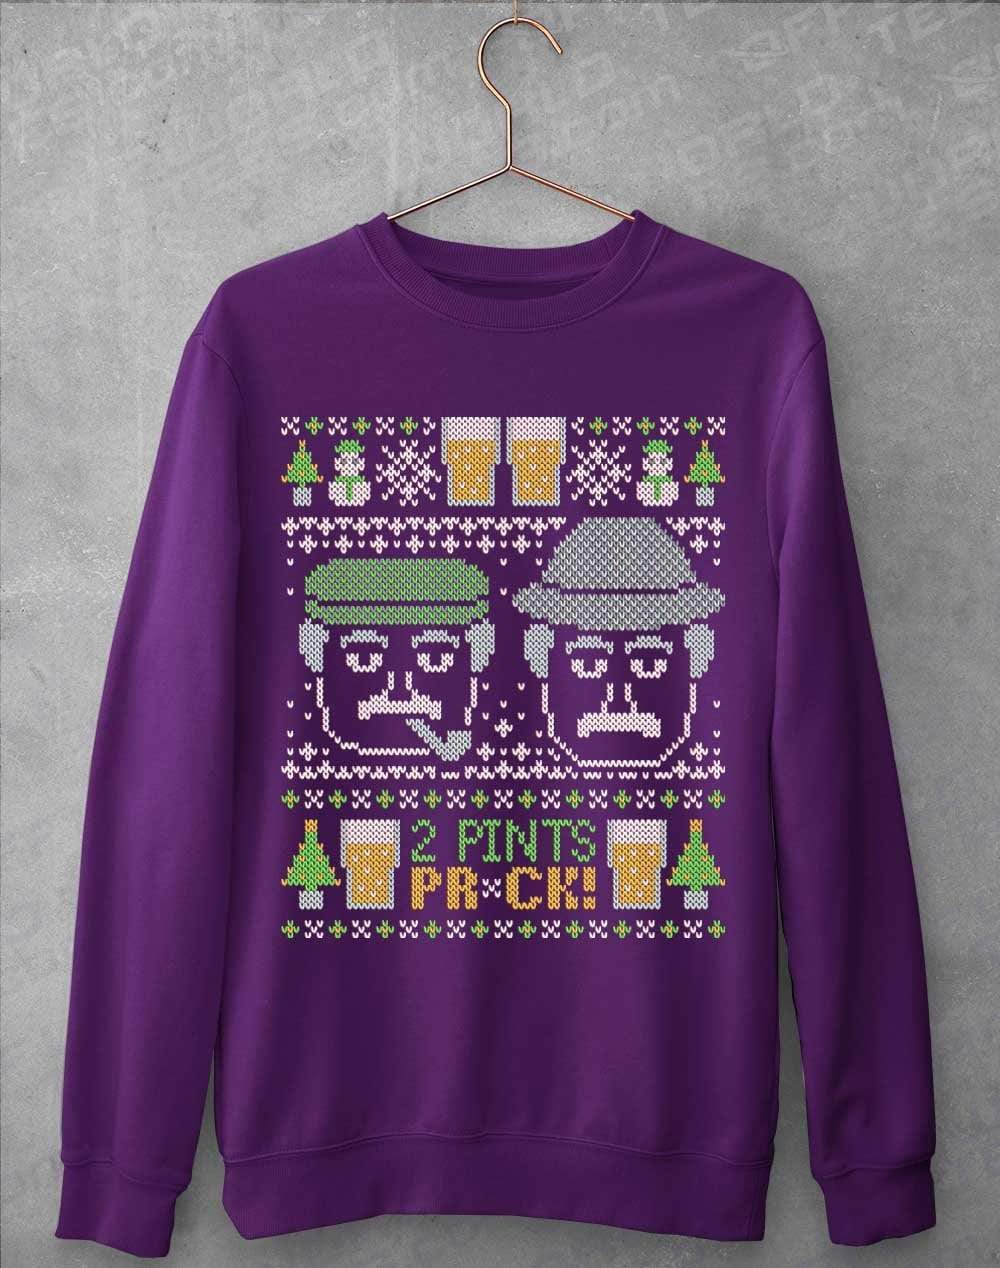 Craiglang Christmas 2 Pints Knit Pattern Sweatshirt  - Off World Tees